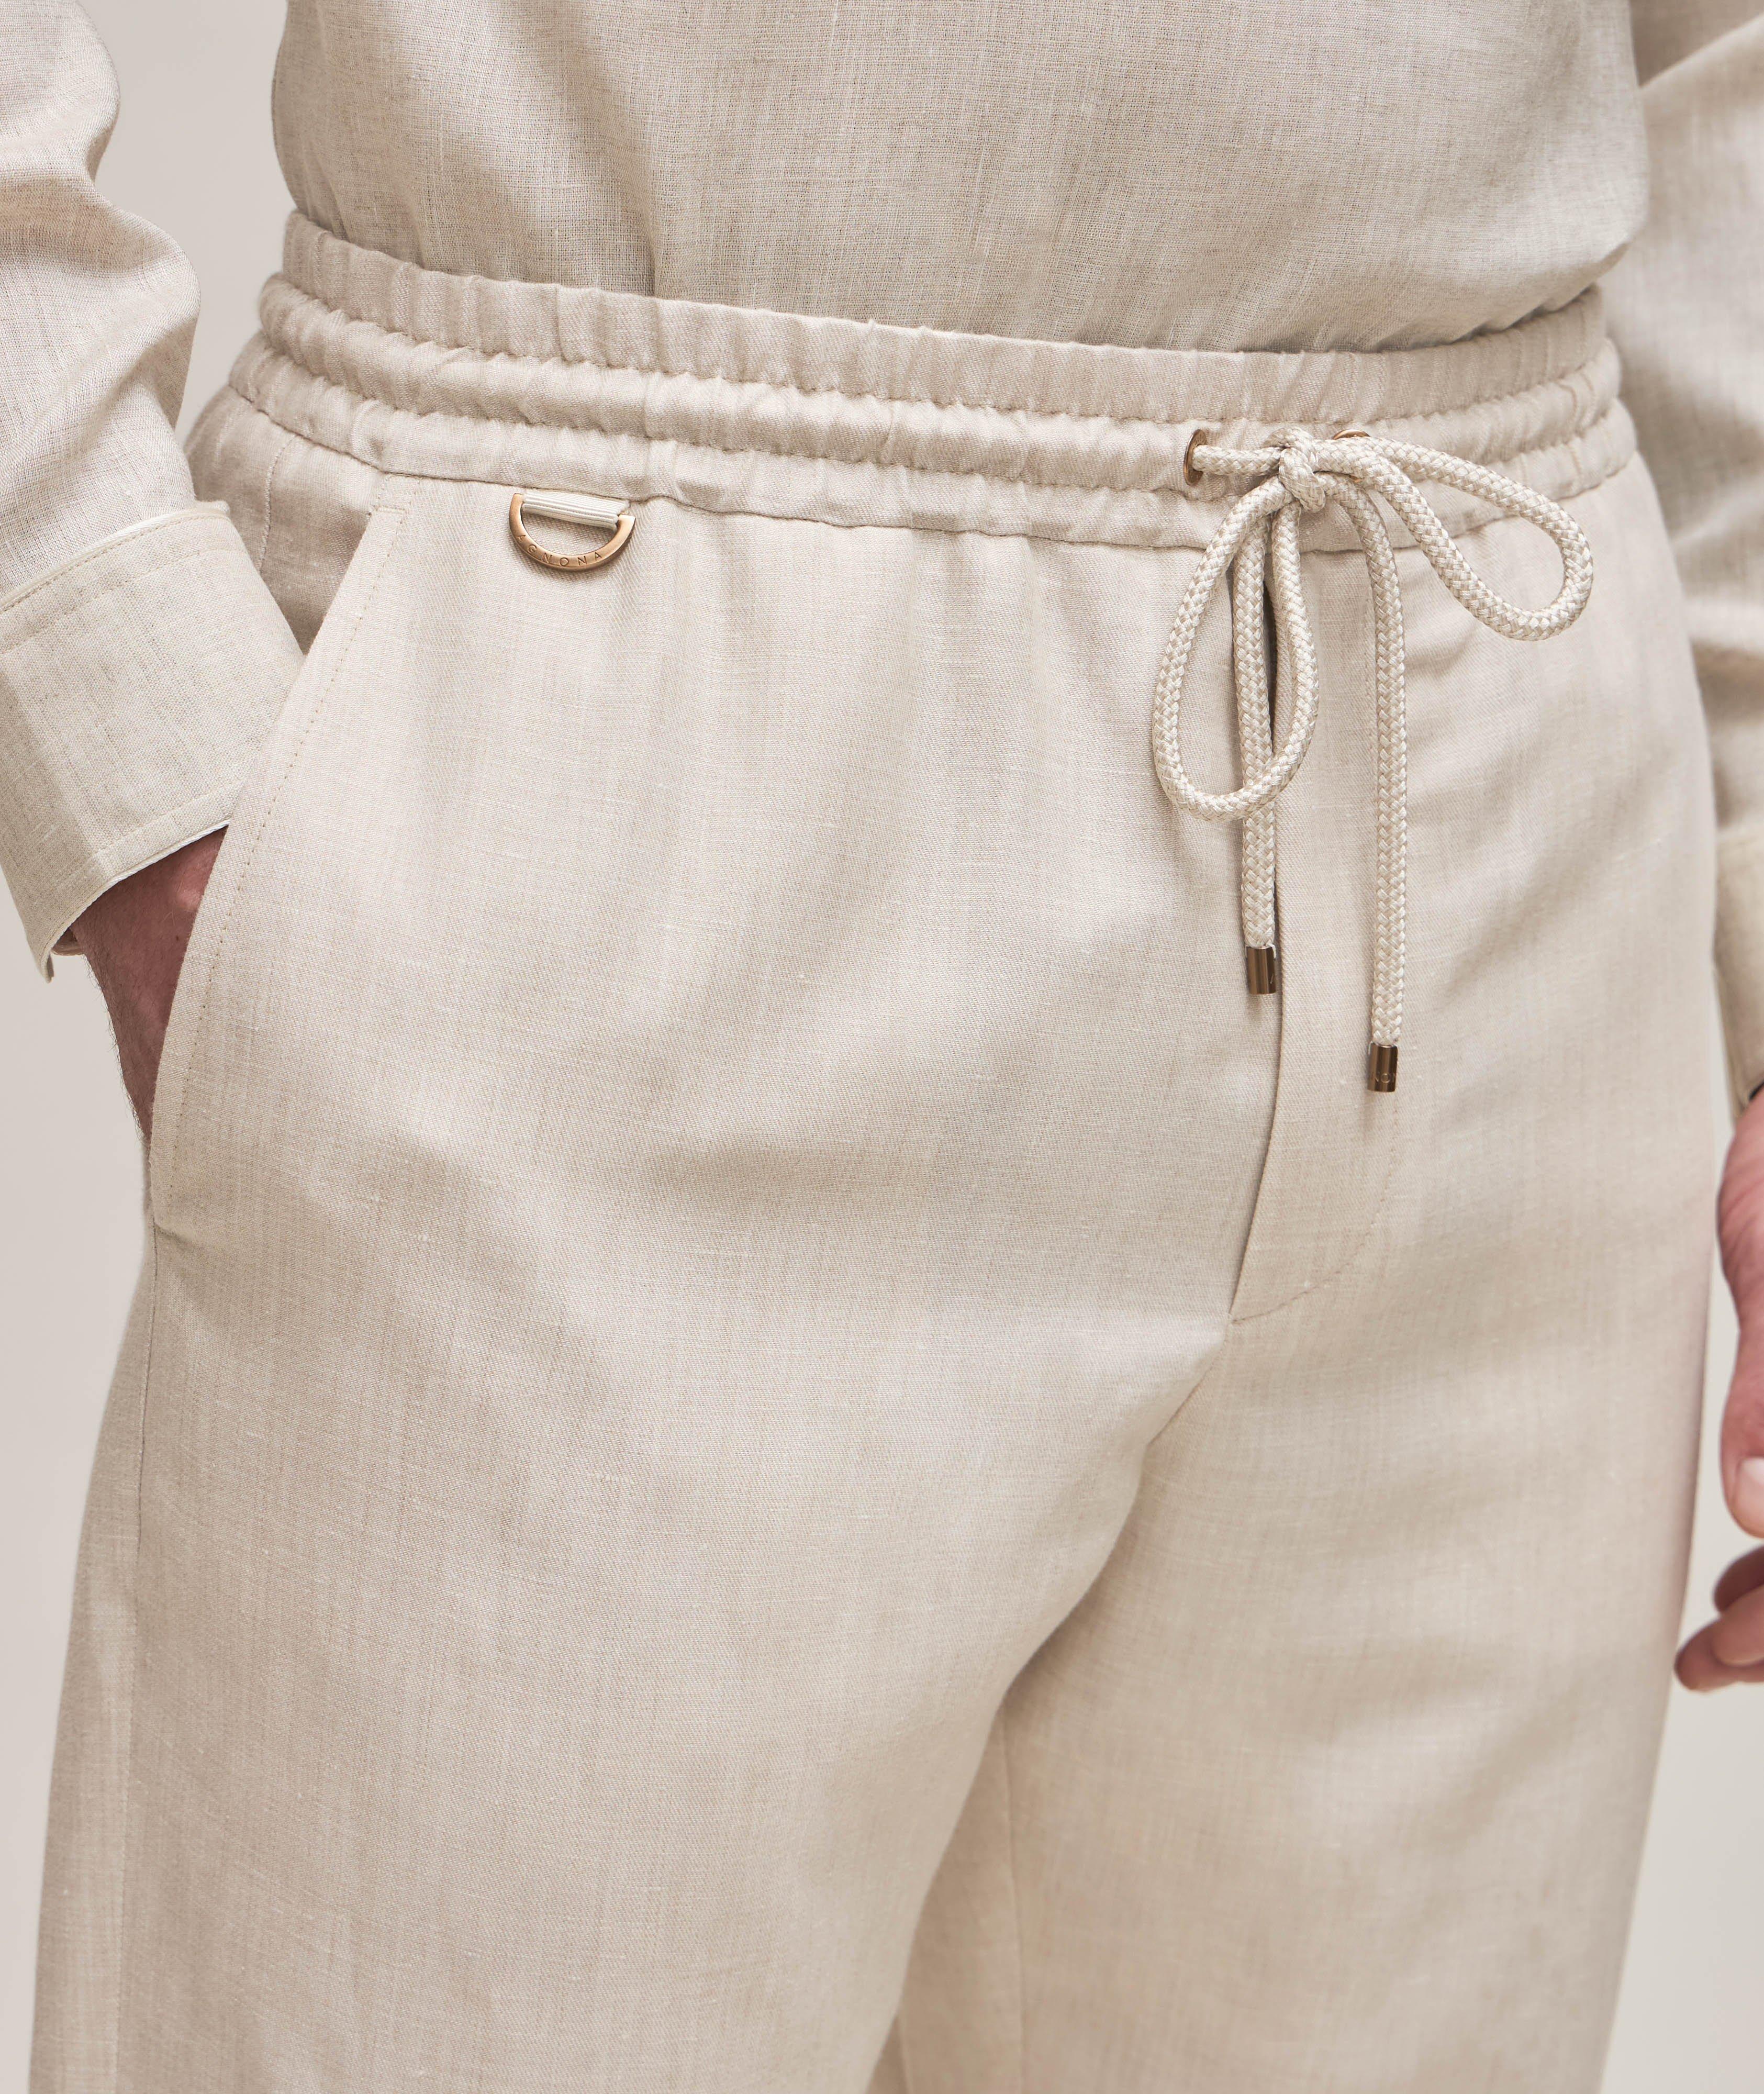 Linen Drawstring Pants